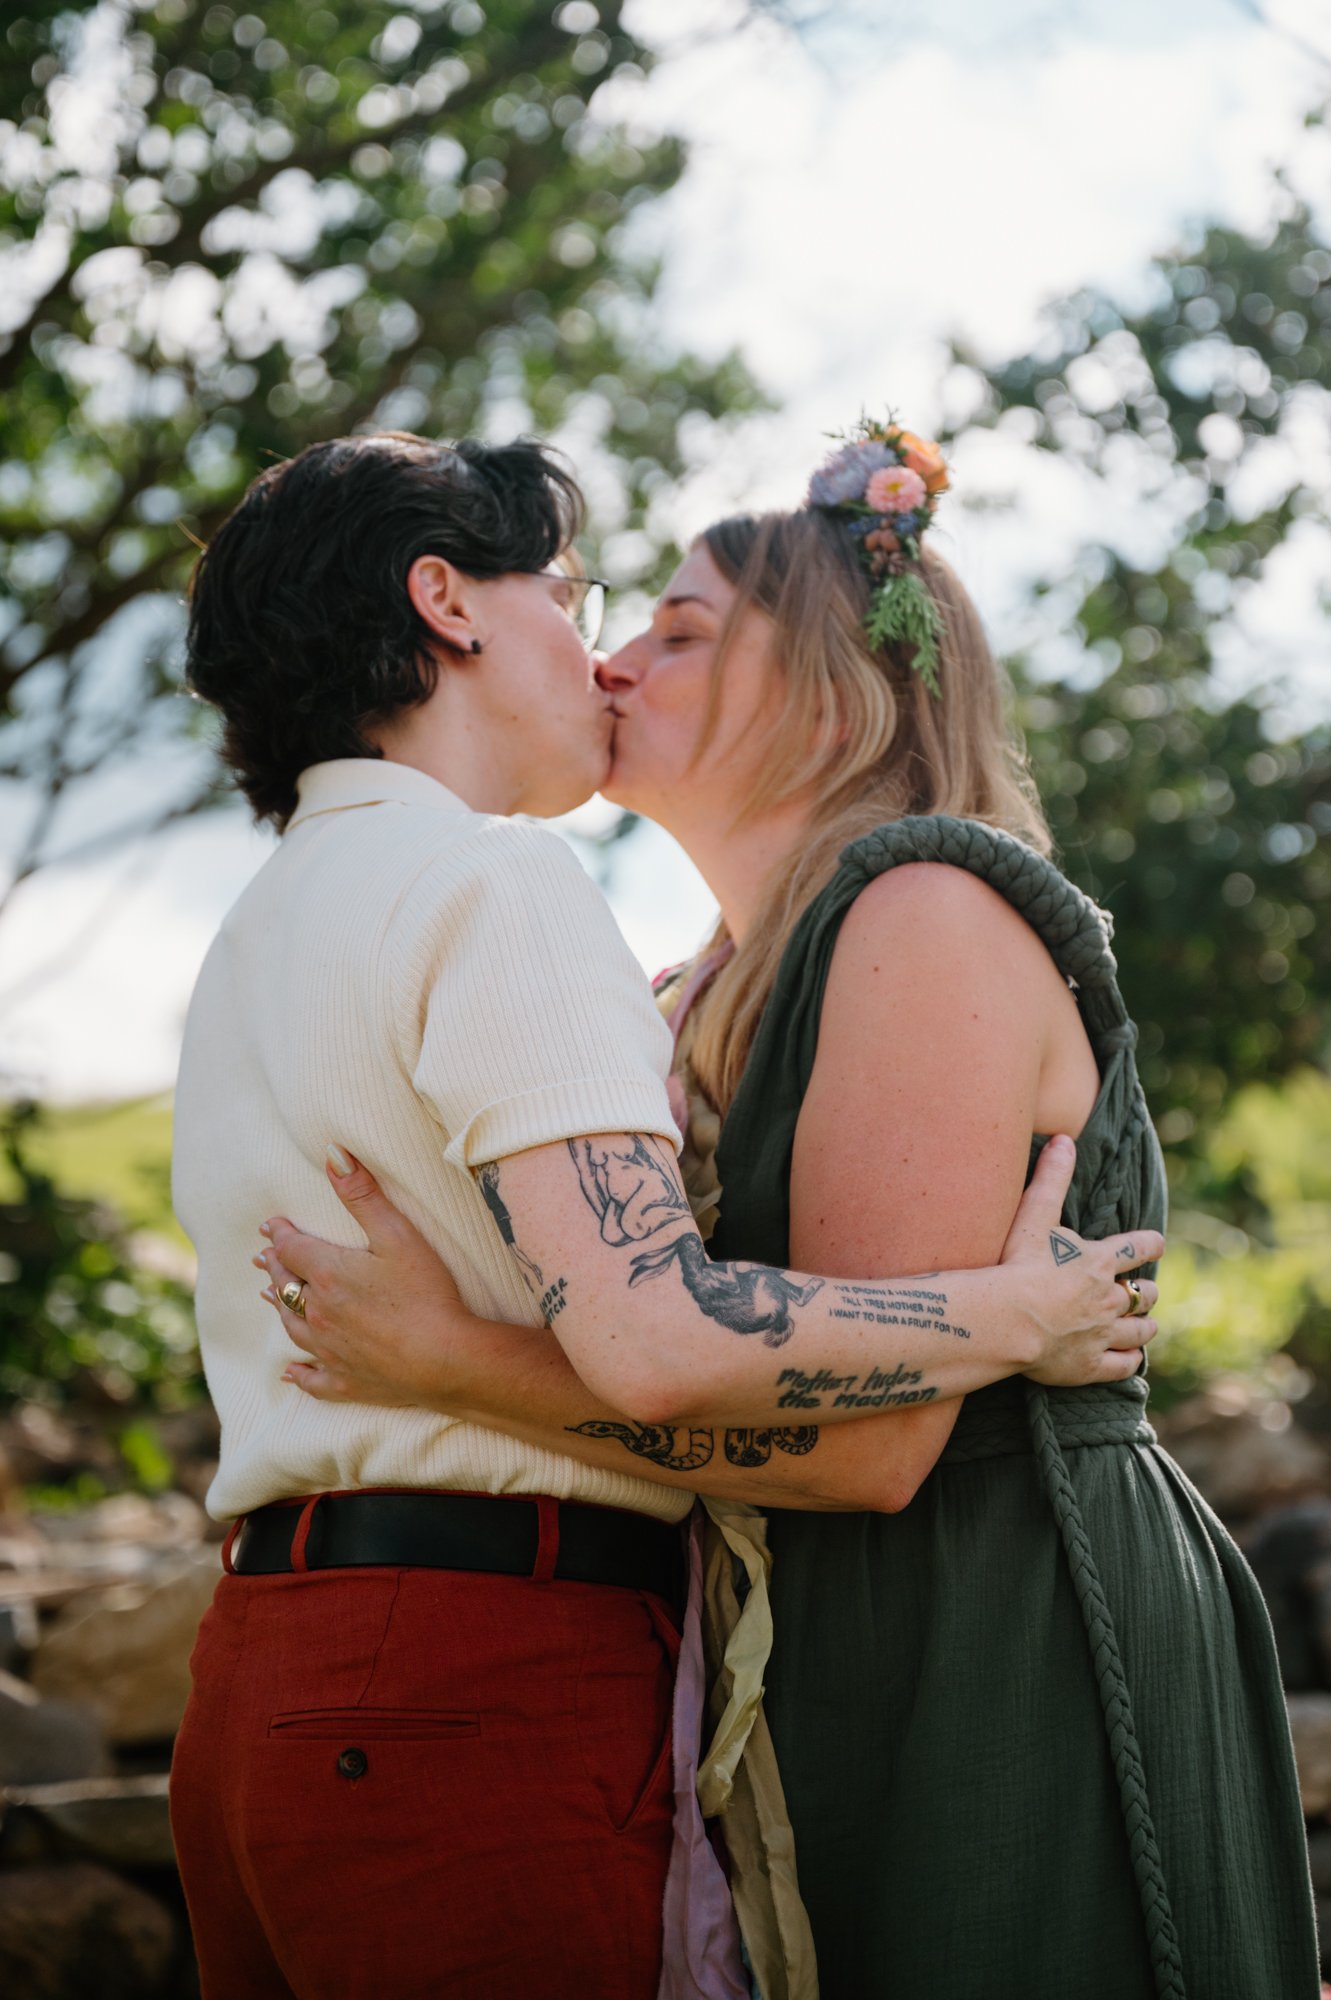 Rosewood-Studios-Bela-Farm-LGBTQ-Wedding-Queer-Inspiration-Documentary-Candid-Photography-39.jpg